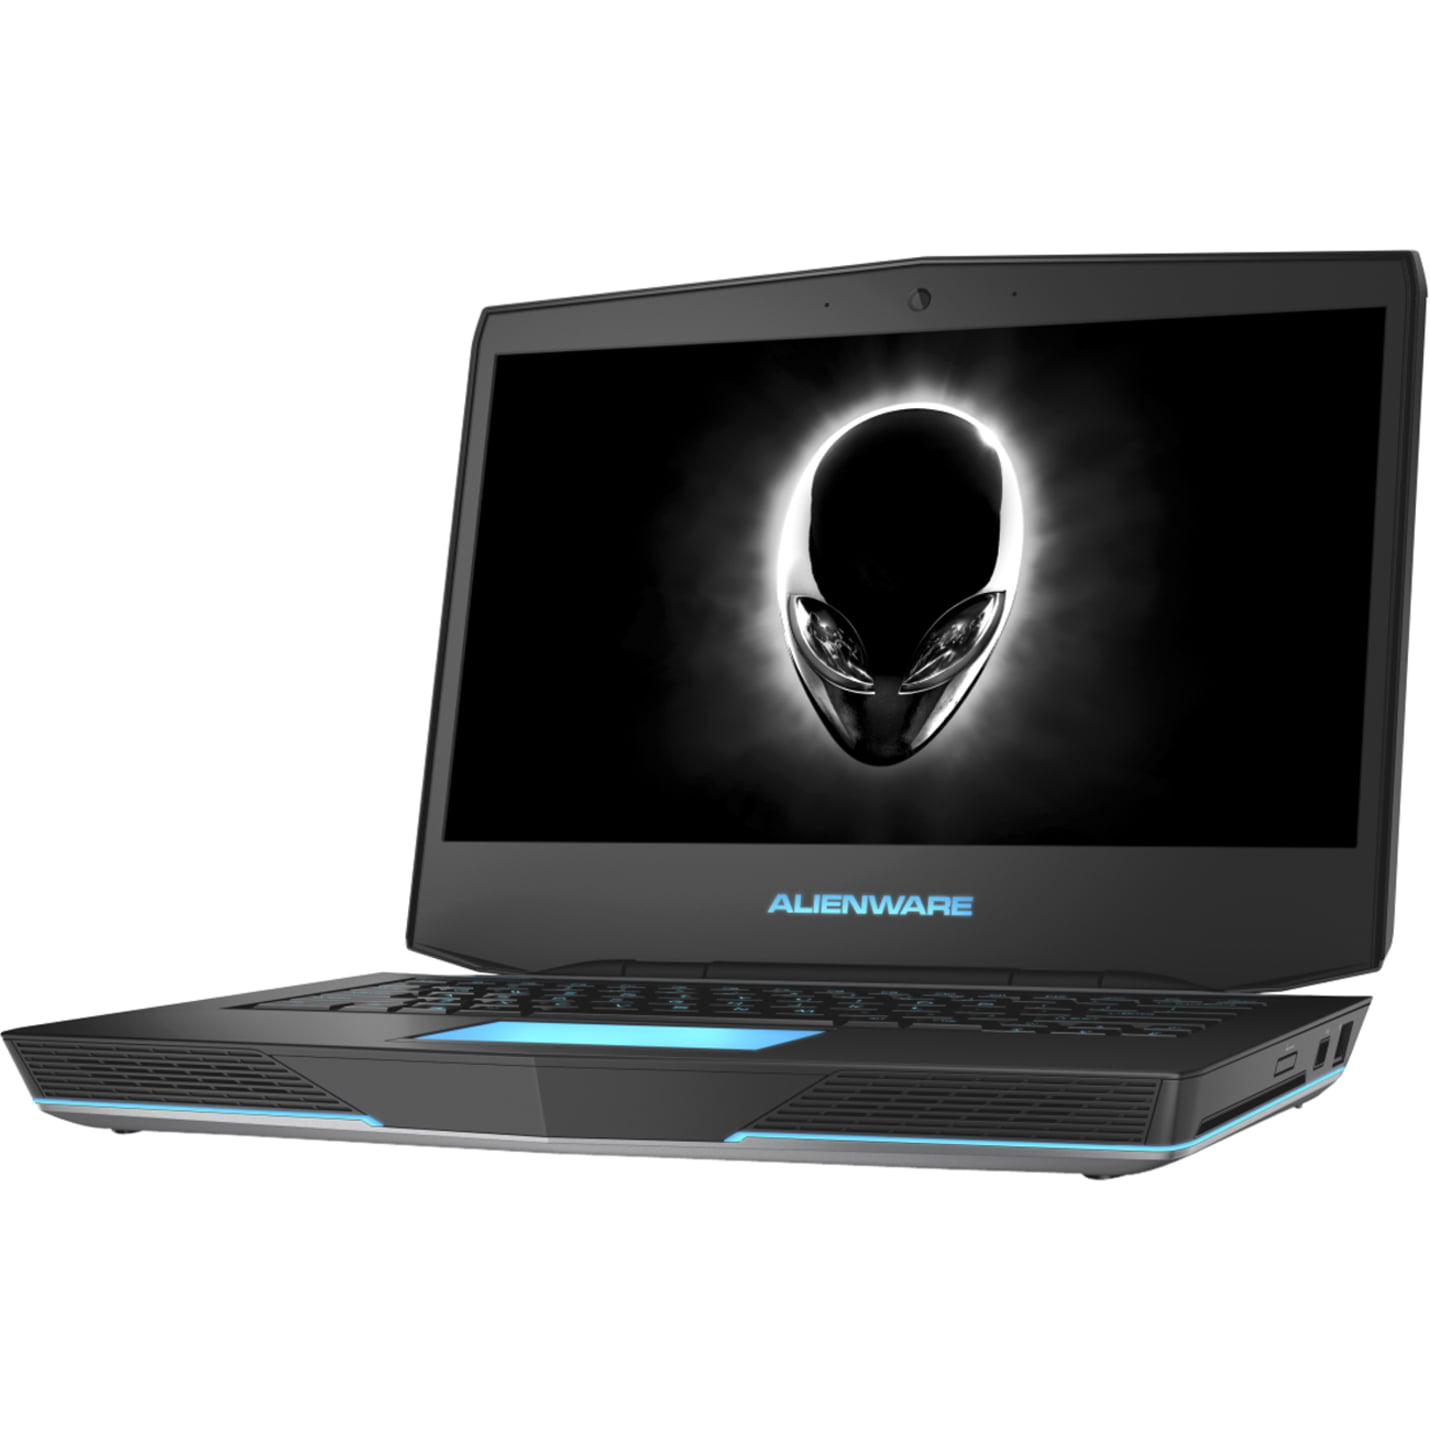 tæt indtryk Takt Alienware 14" Gaming Laptop, Intel Core i7 i7-4700MQ, 750GB HD, DVD Writer,  Windows 8, ALW14-5312SLV - Walmart.com